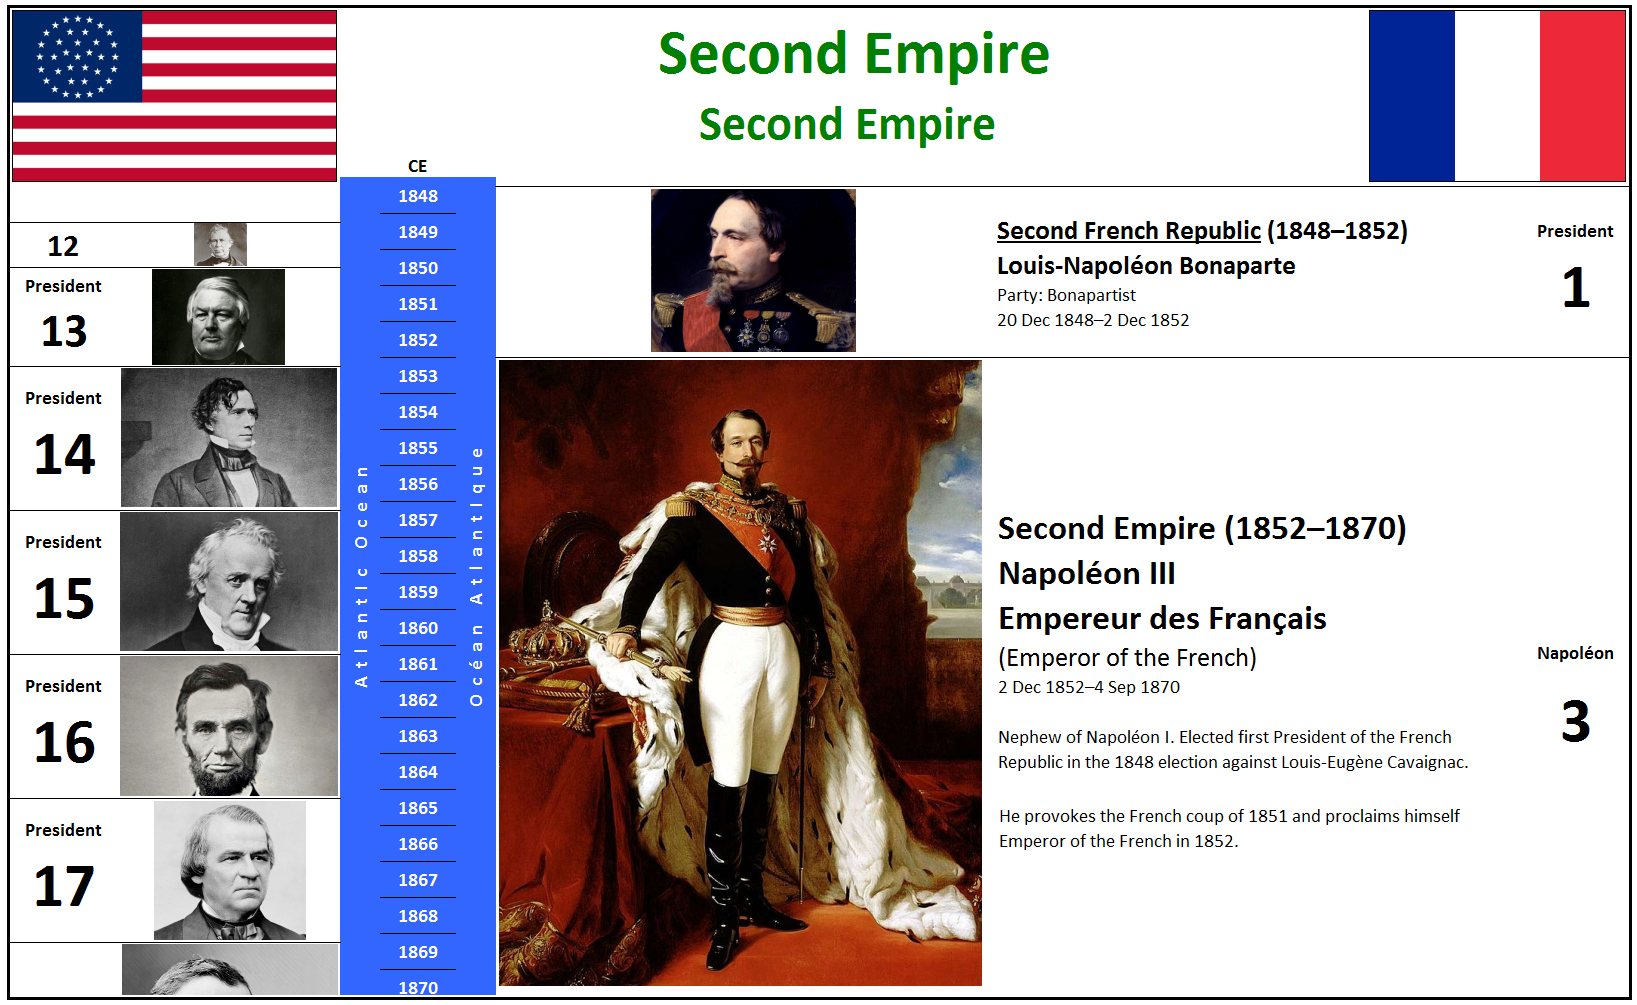 1848 Second Republic (1848–1852) and Second Empire (1852–1870)